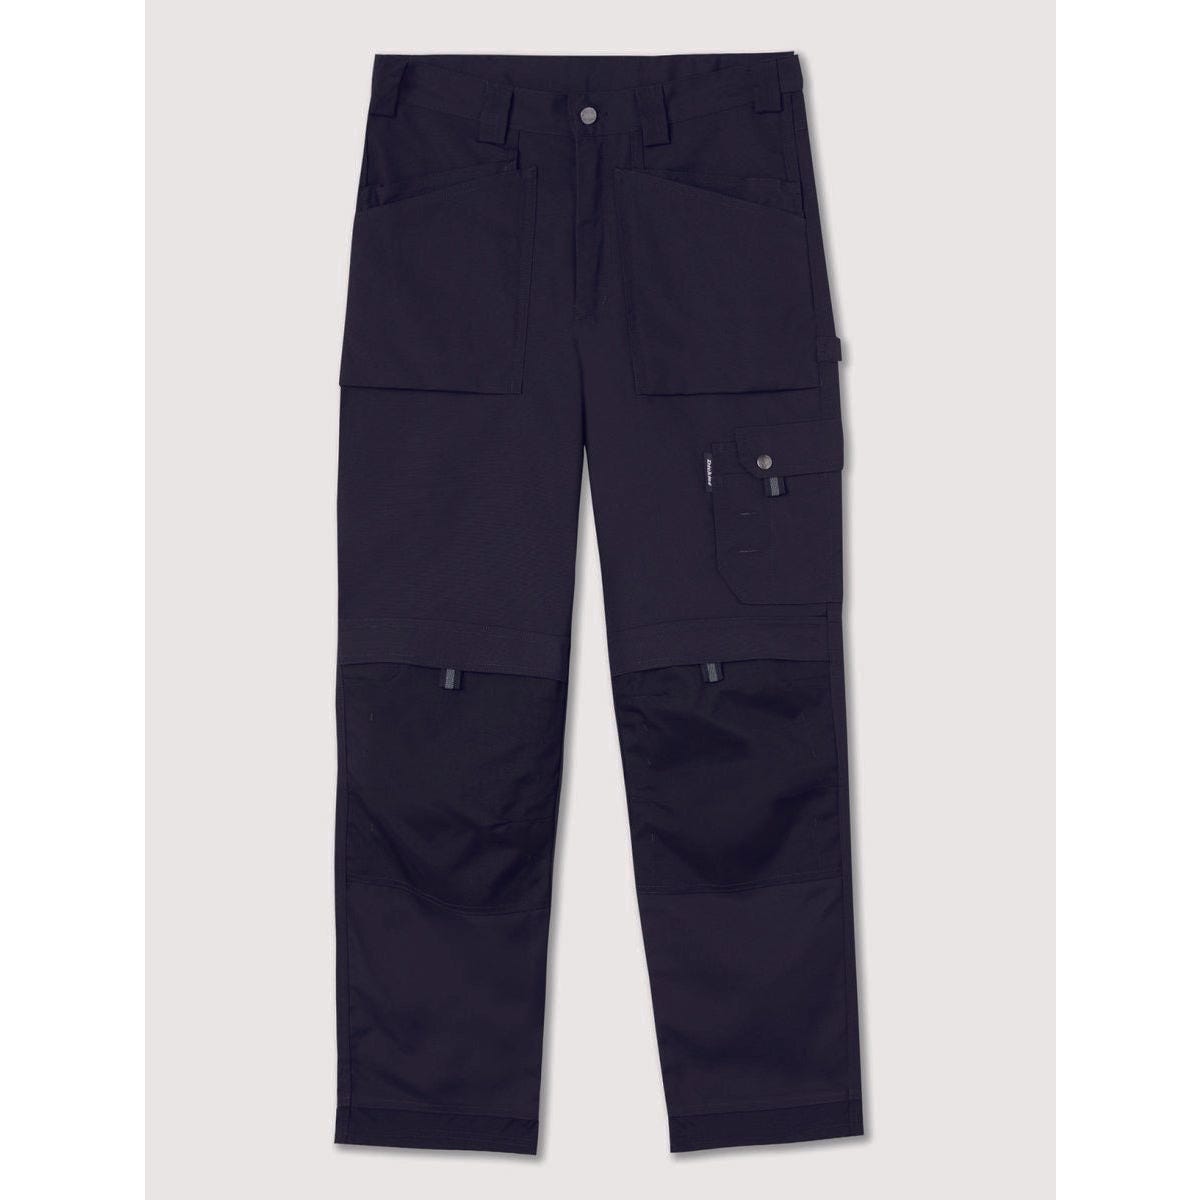 Pantalon Eisenhower multi-poches Noir - Dickies - Taille 44 6